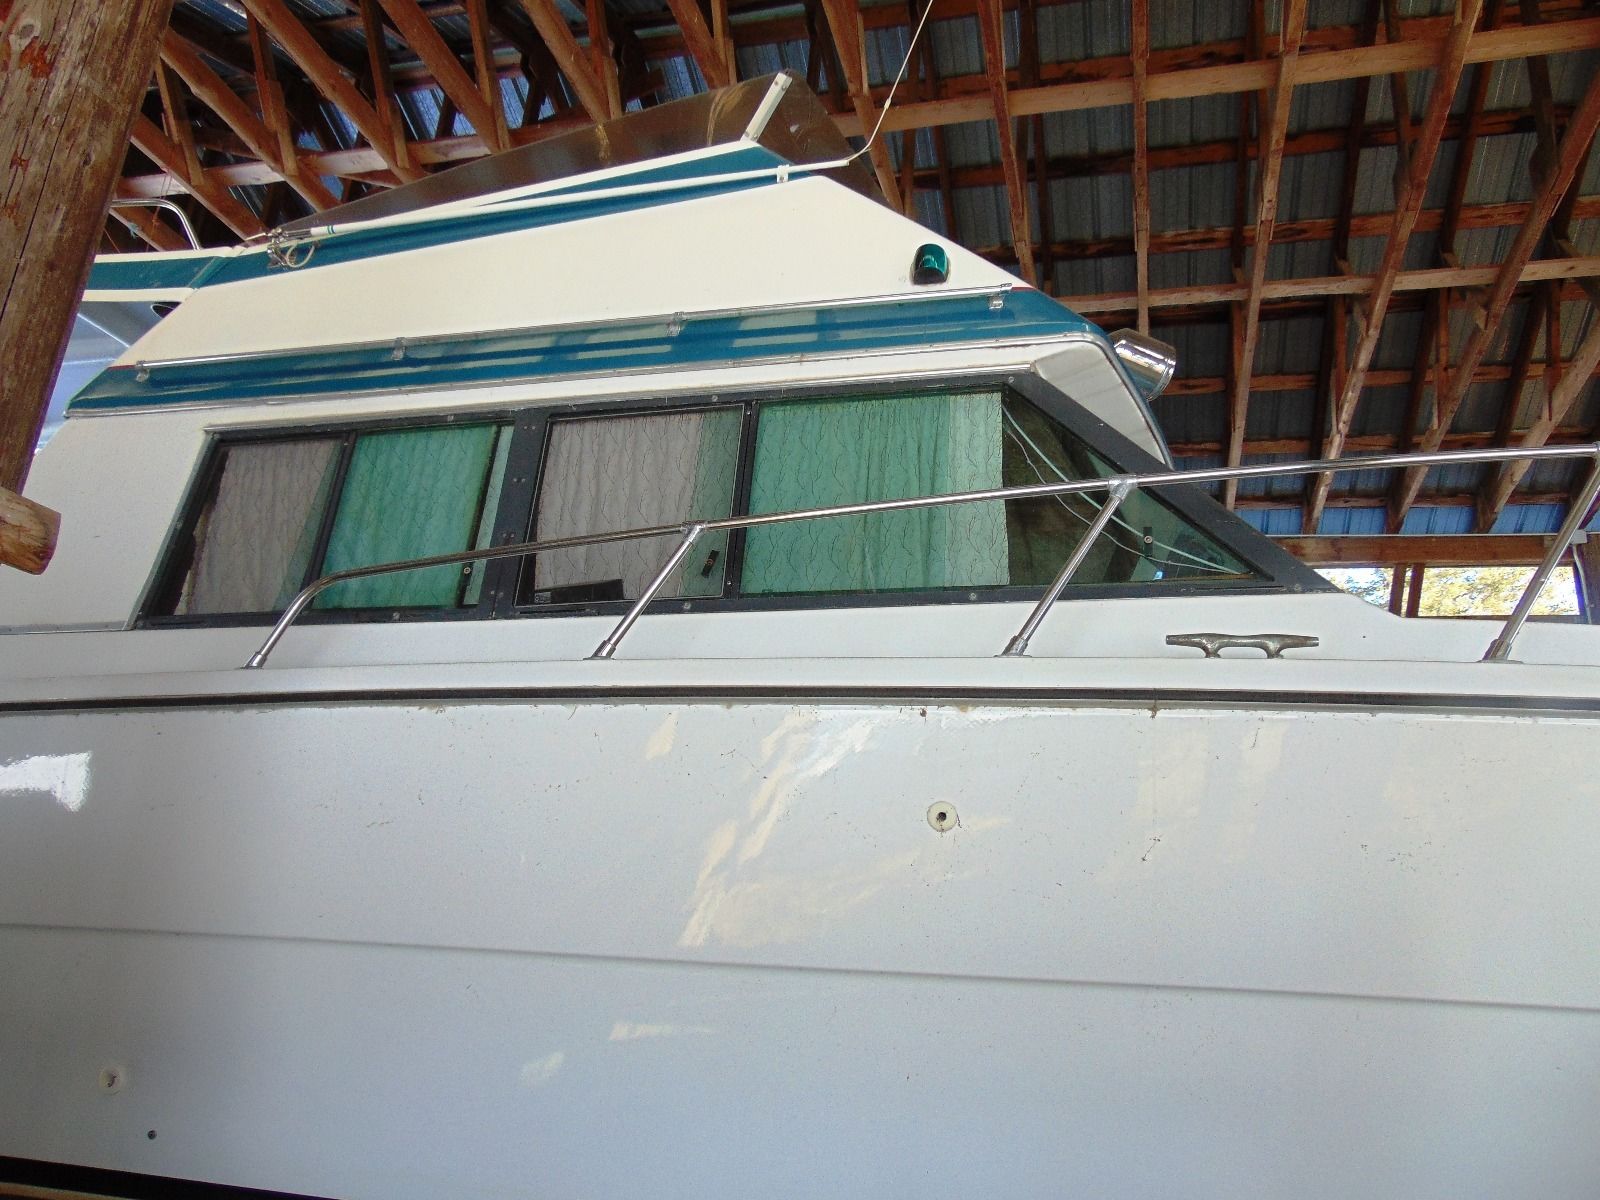 FIBERFORM CABIN CRUISER 1977 for sale for $15,000 - Boats 